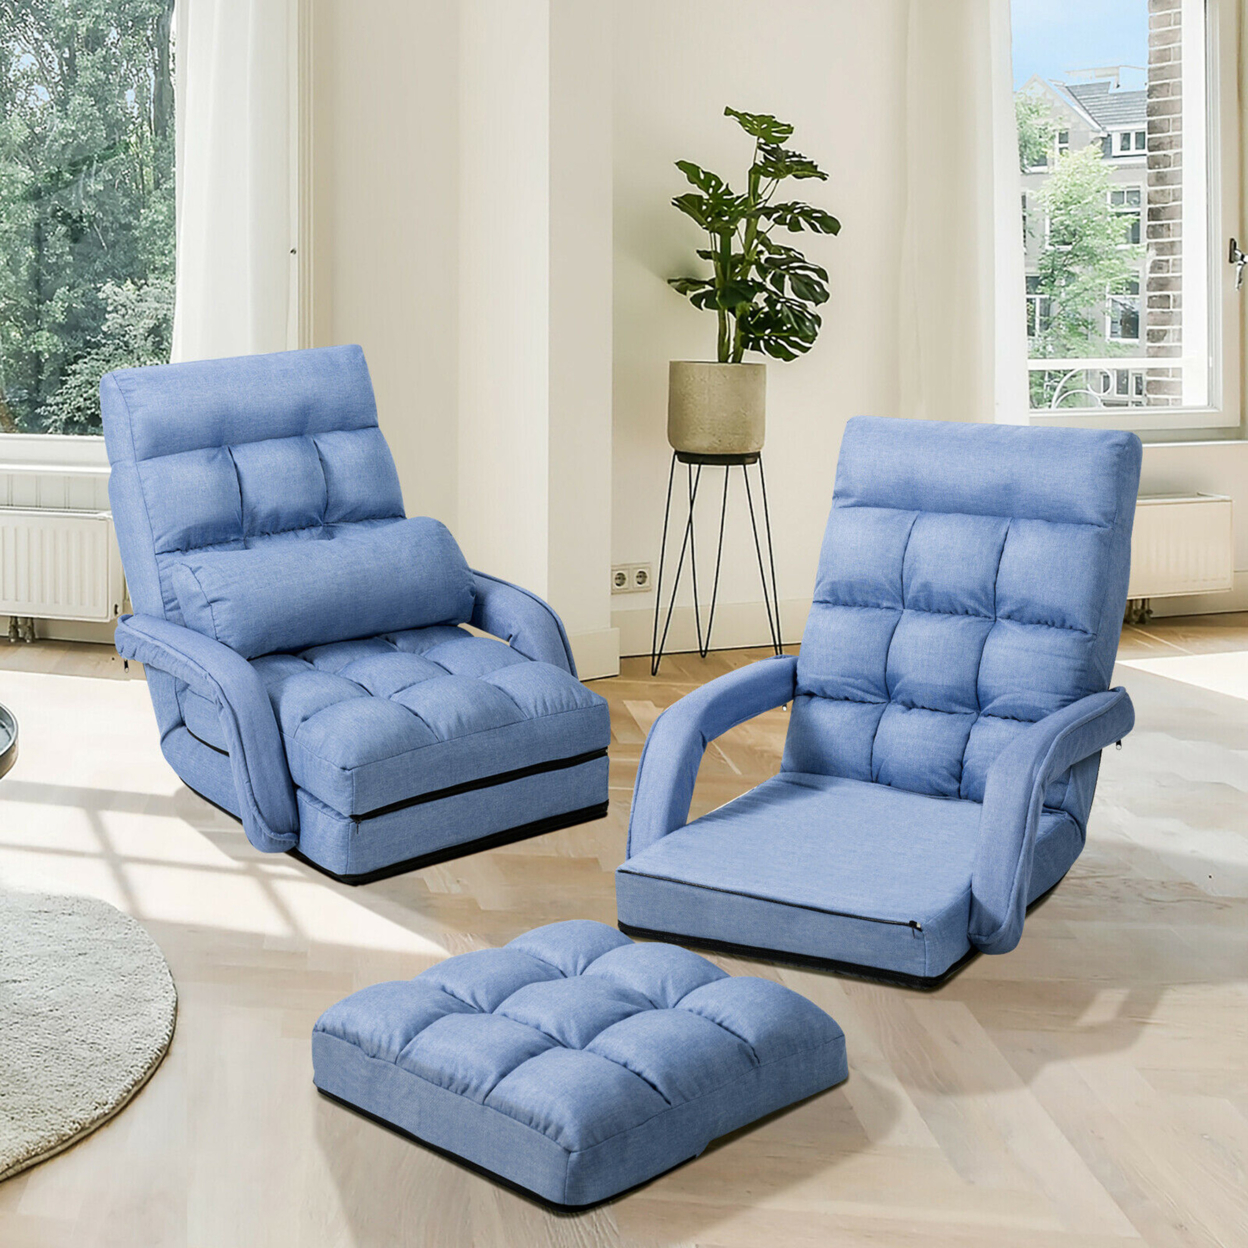 Folding Floor Chair Adjustable Armchair Chaise Lounge Chair Lazy Sofa - White